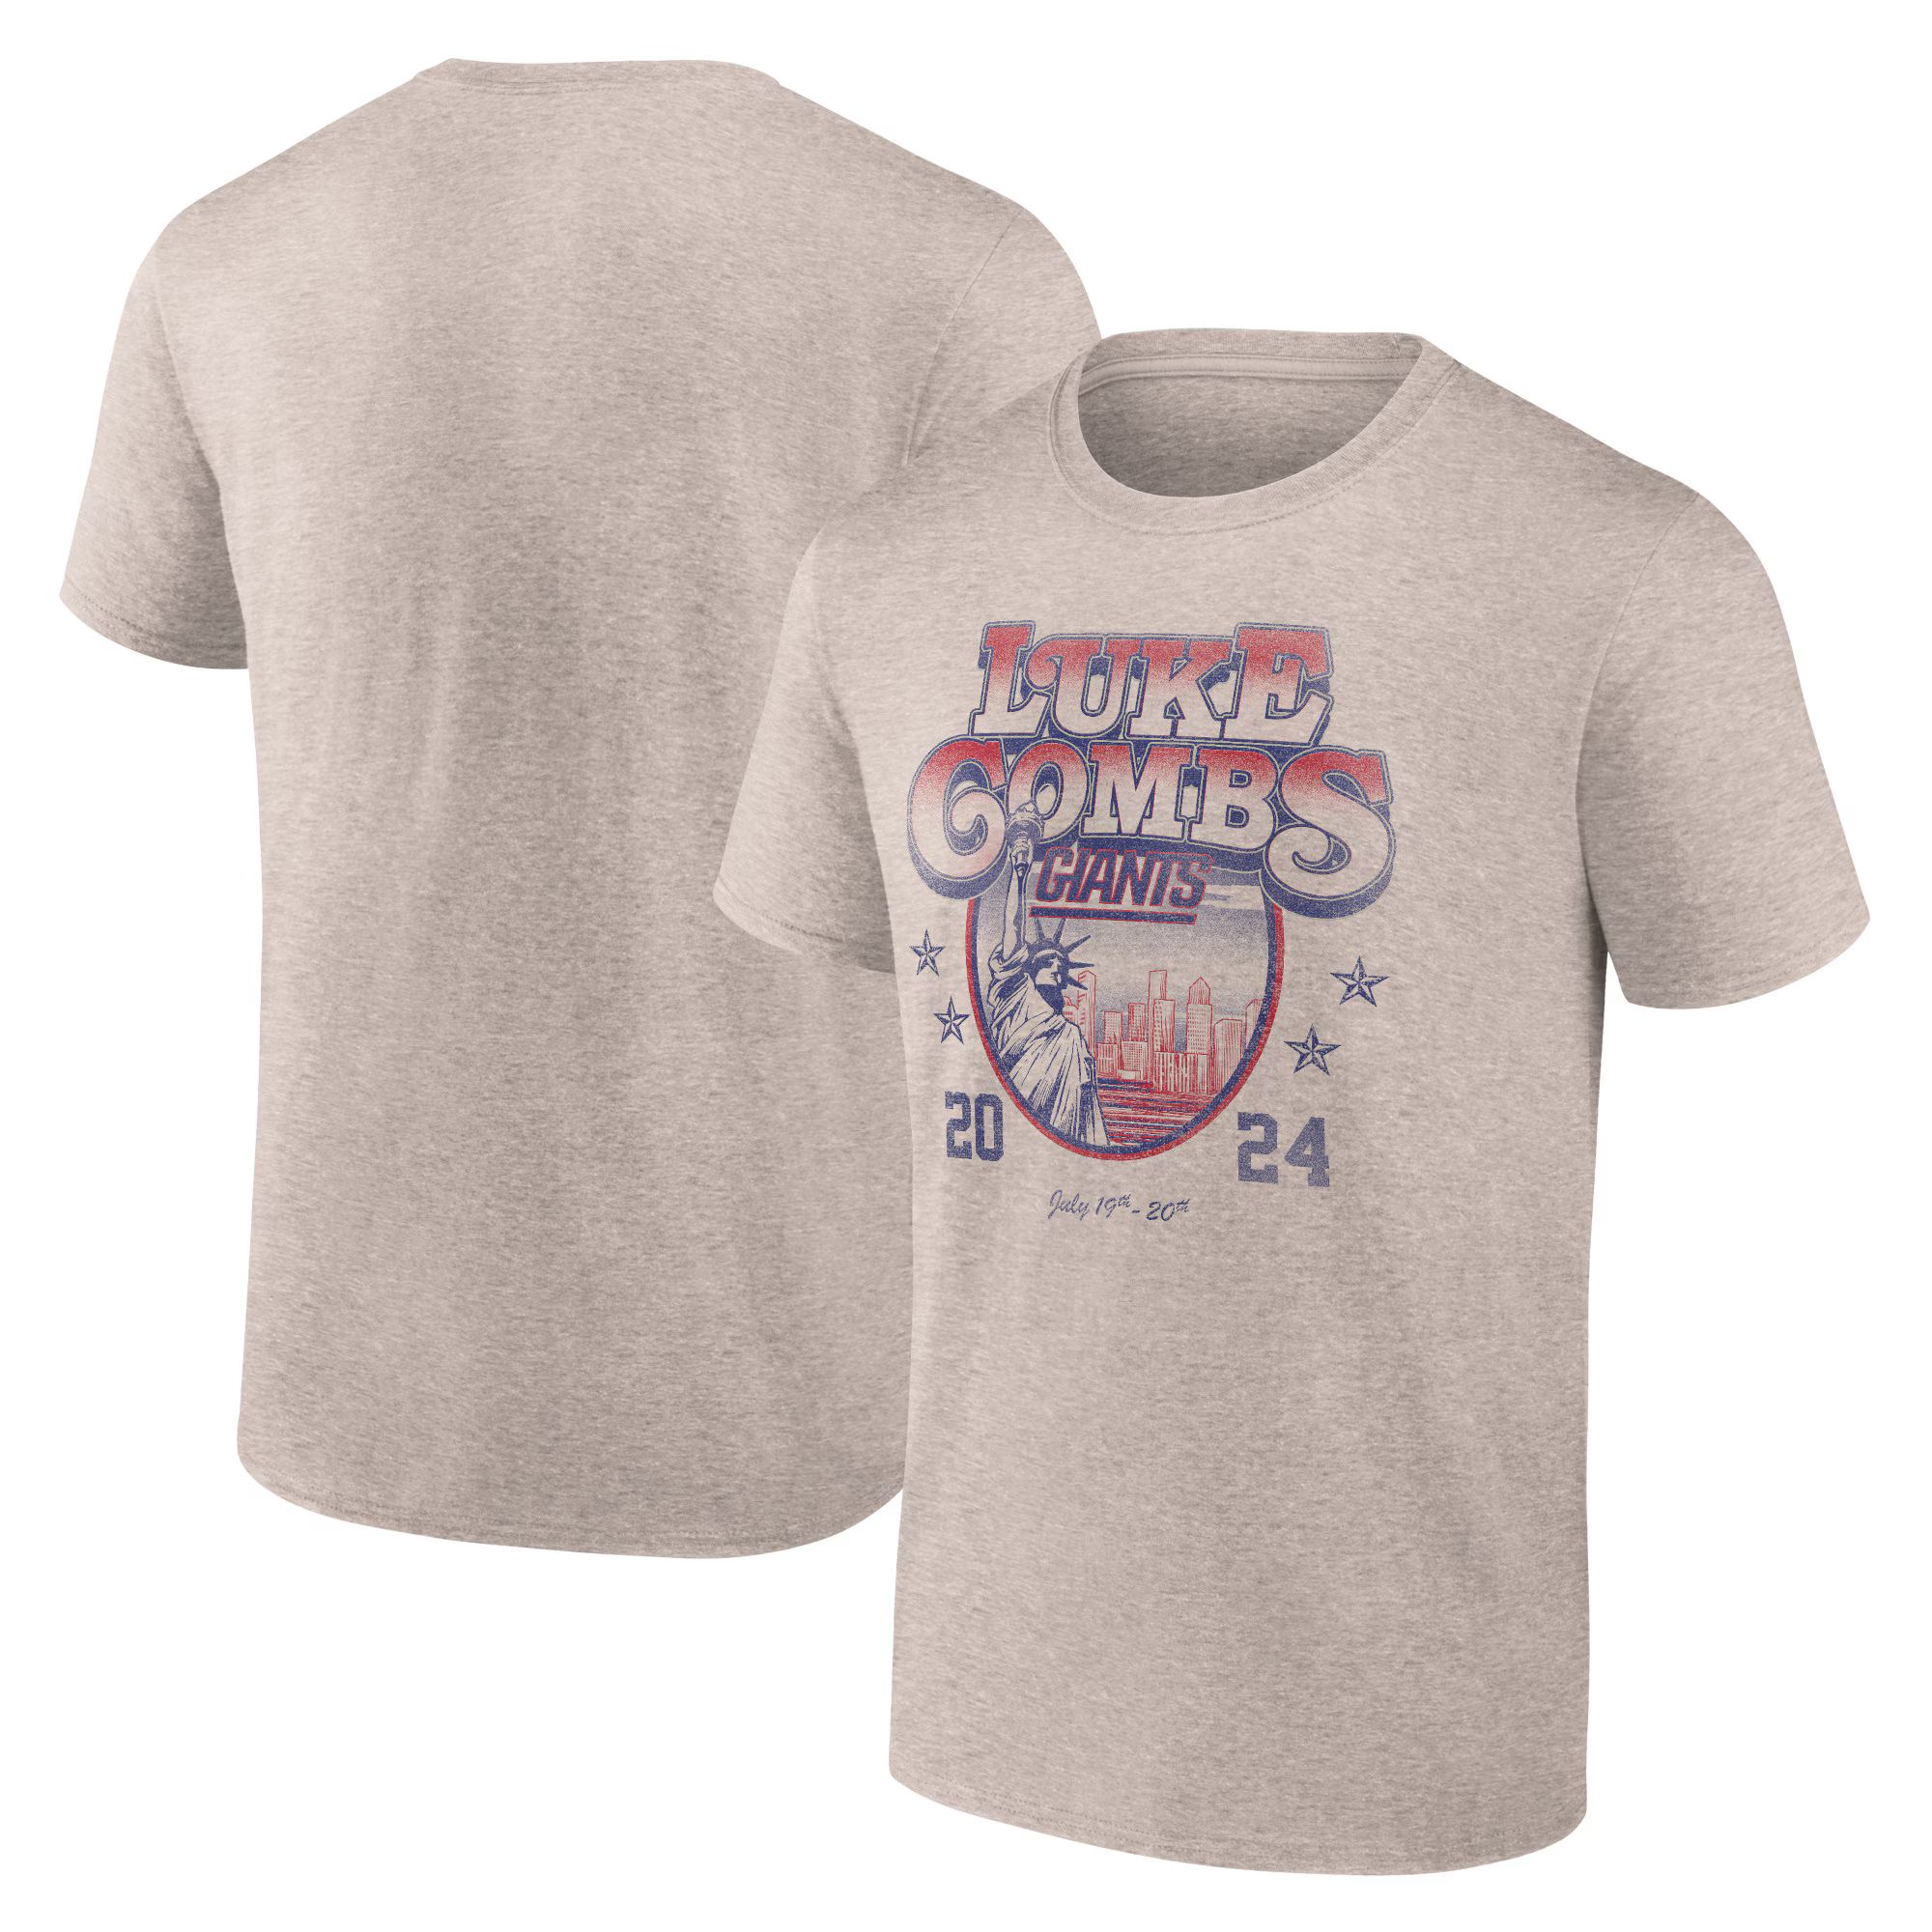 Luke Combs x New York Giants Fanatics Branded Growin' Up and Gettin' Old Tour T-Shirt - Tan | Fanatics